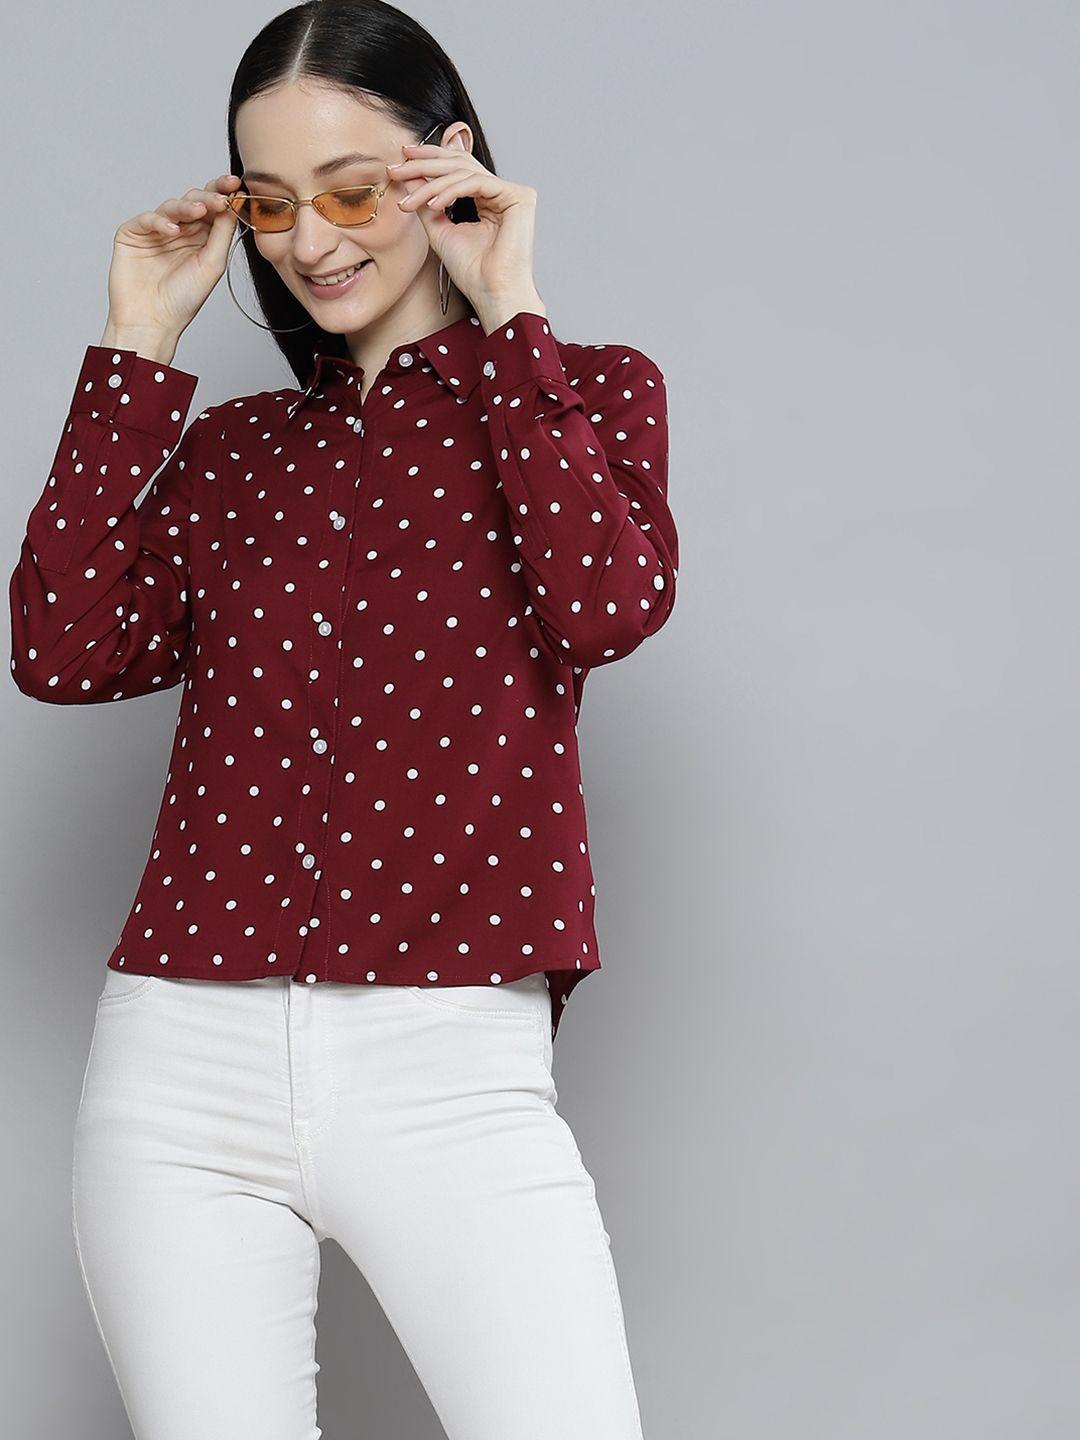 dennison women maroon & white smart polka dot printed casual shirt